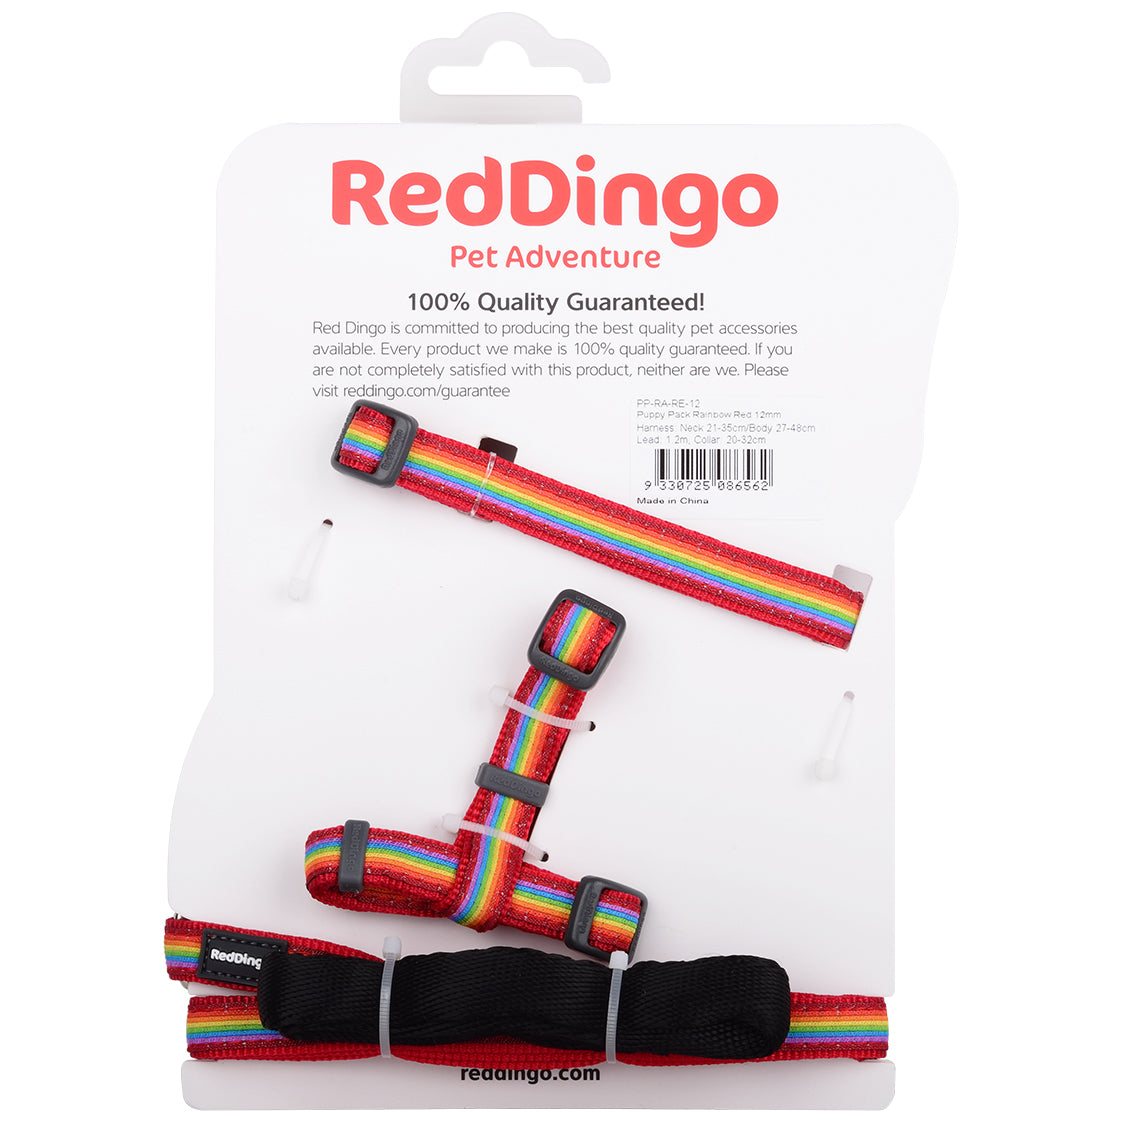 Red Dingo Puppy Kit Rainbow